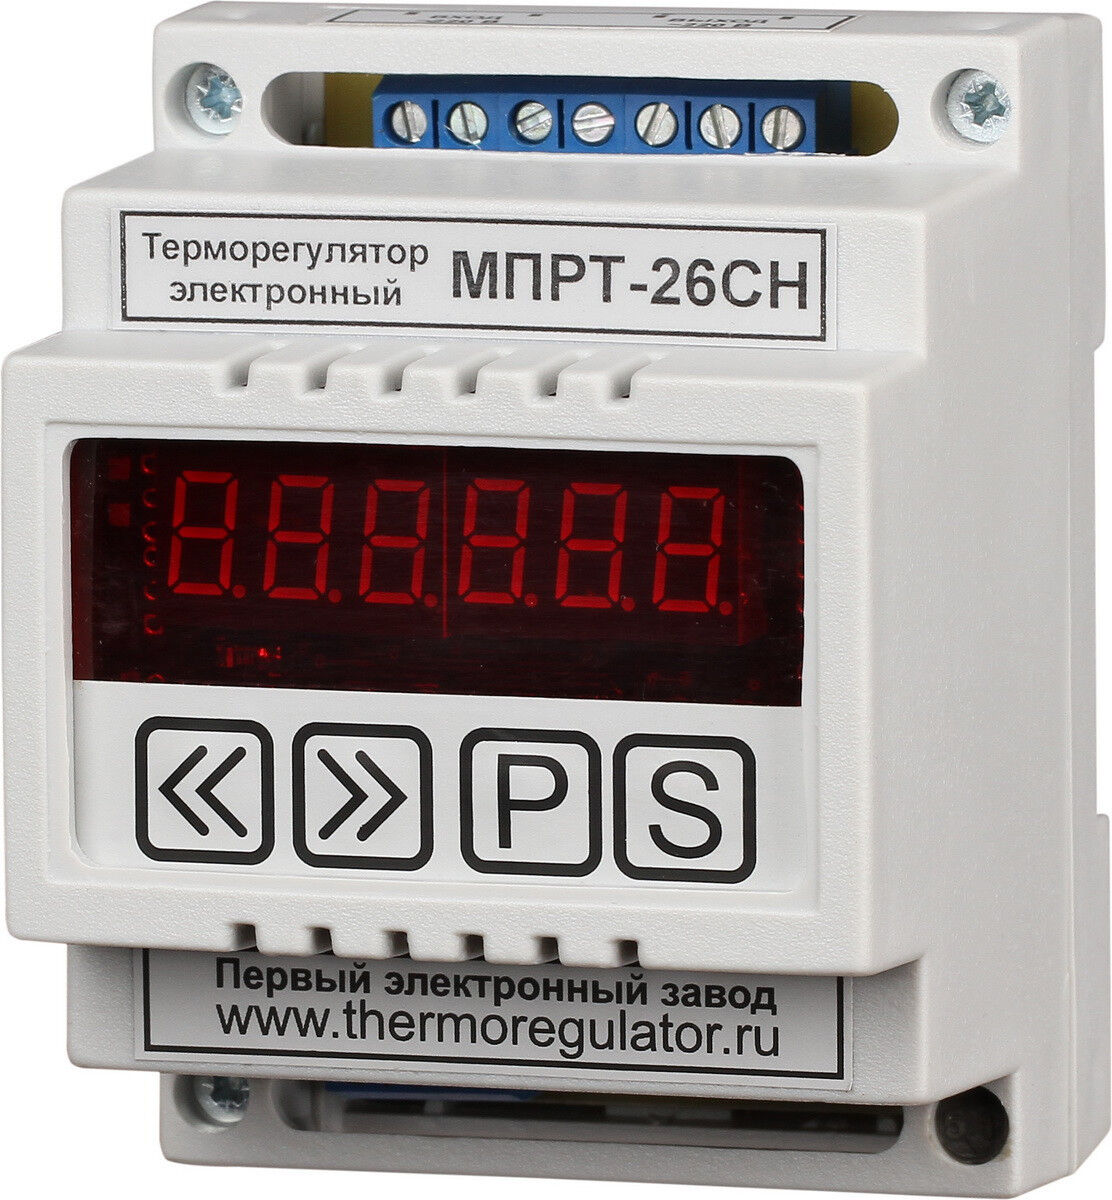 Терморегулятор МПРТ-26СН 1 кВт с датчиками KTY-81-110 цифровое управление DIN ПЭЛЗ